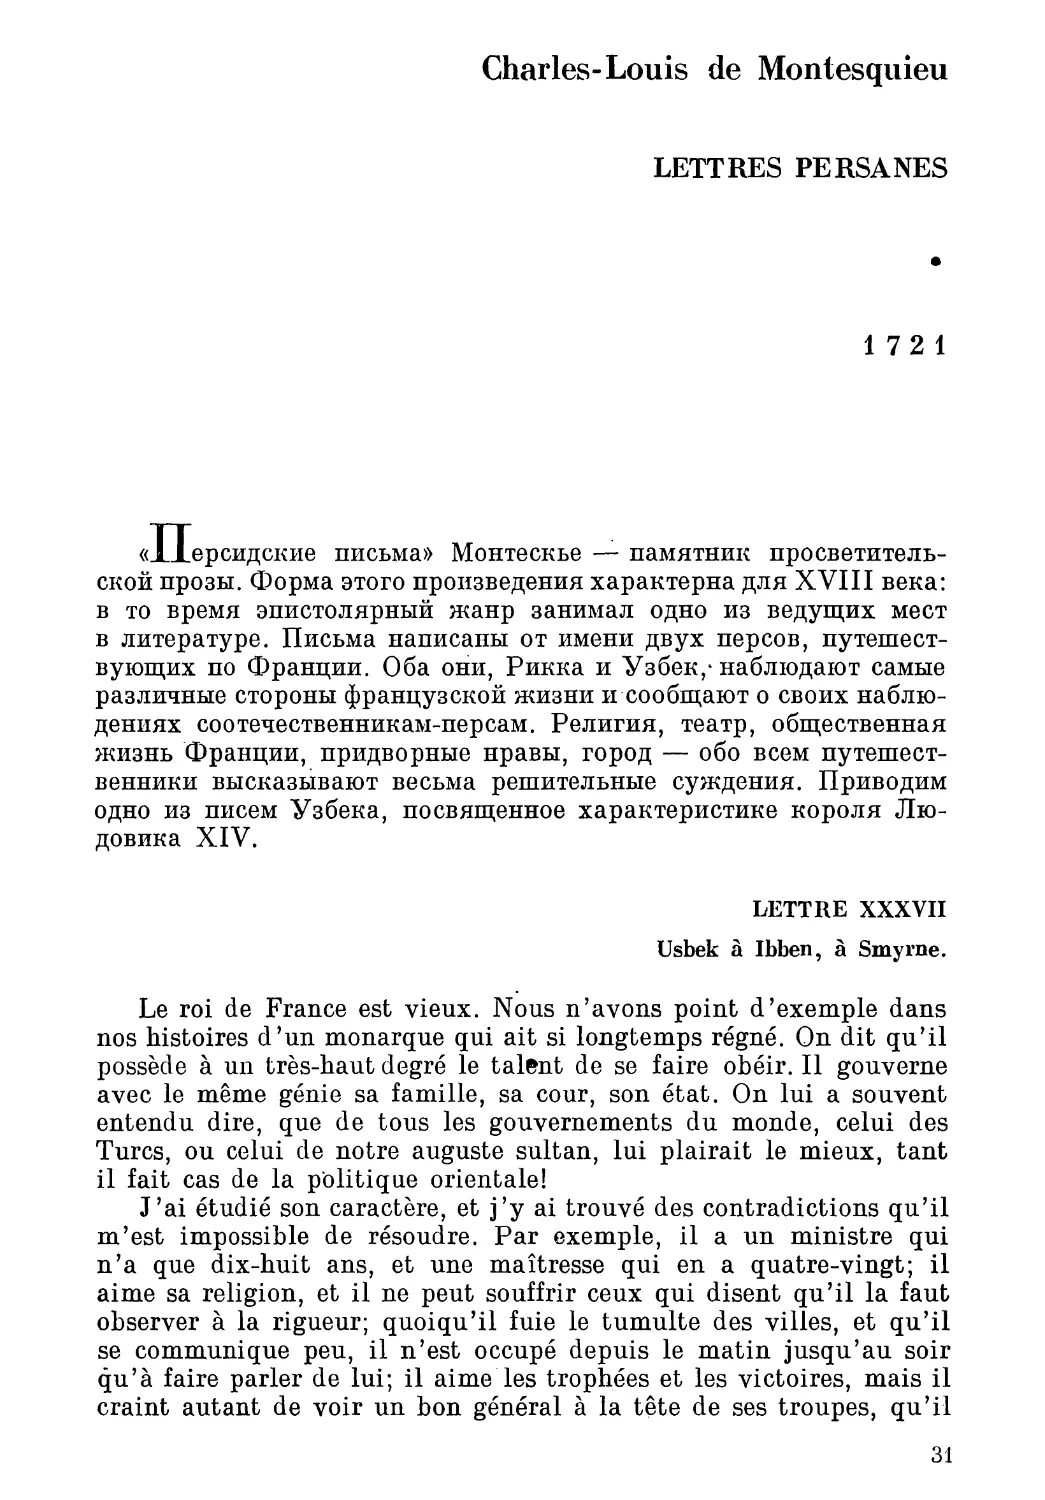 Charles-Louis de Montesquieu: Lettres persanes